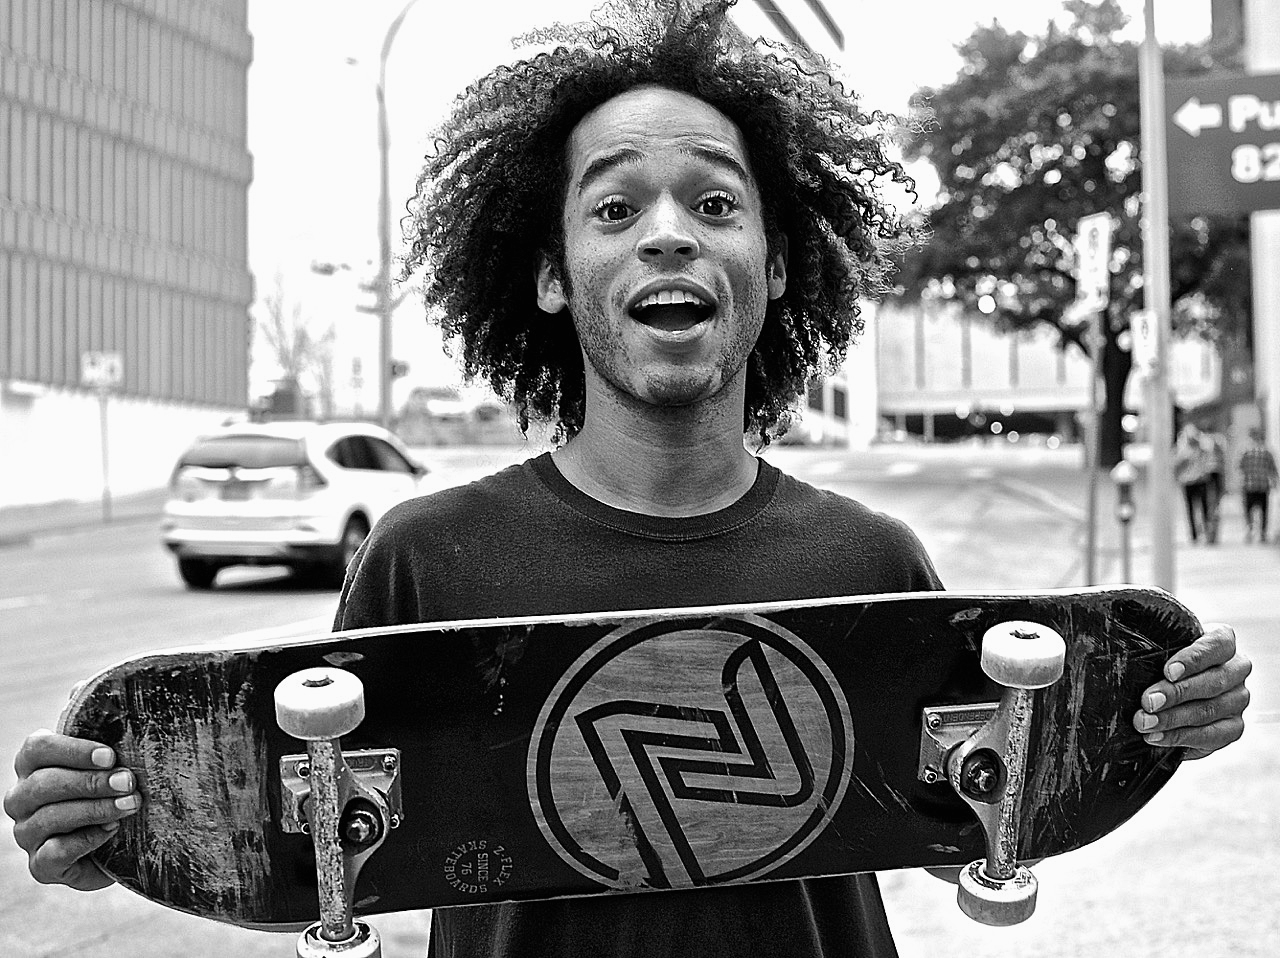 Downtown Austin portrait: Skateboarder Brandon Cole